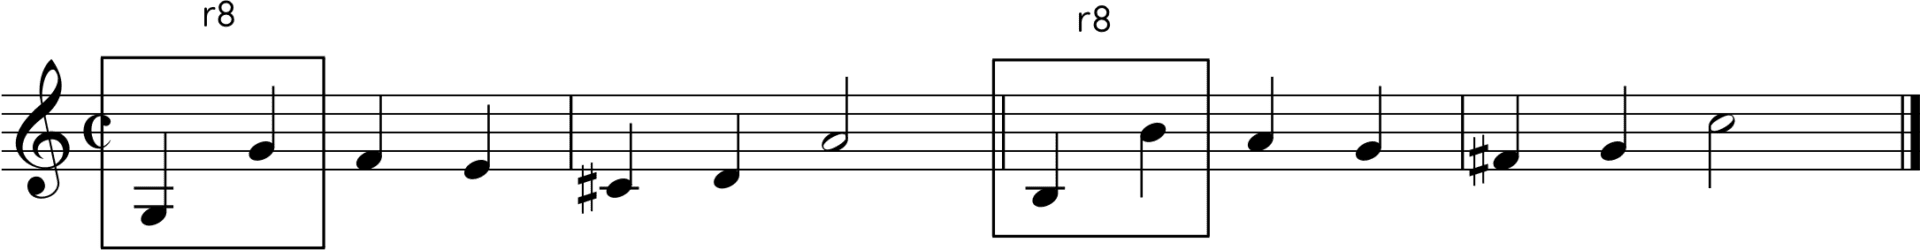 De to første tonene i sangen When you wish upon a star danner en ren oktav.